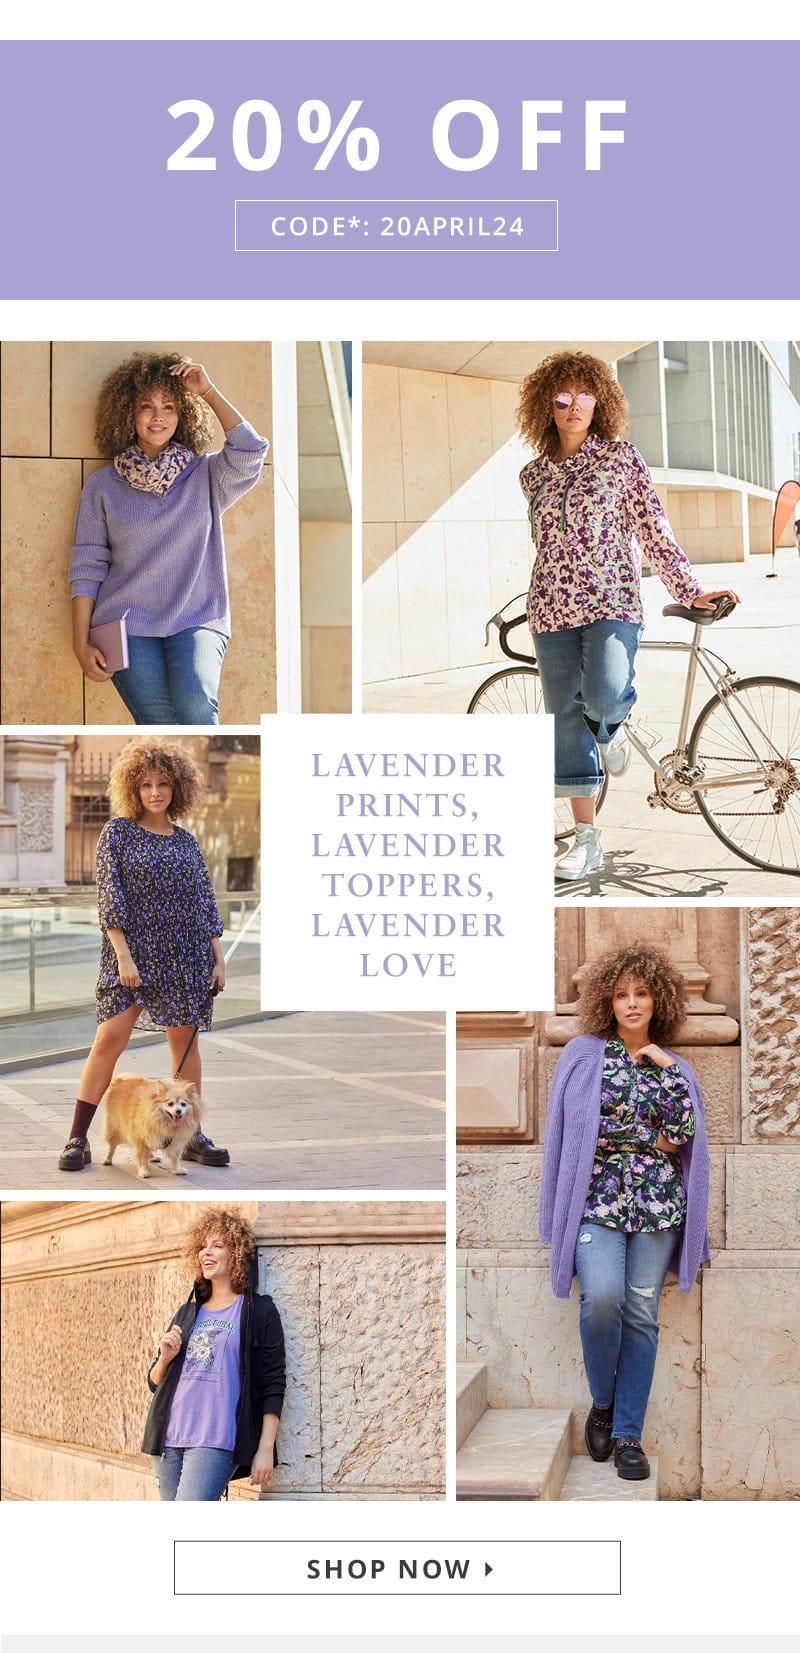 Lavender prints, lavender toppers, lavender love